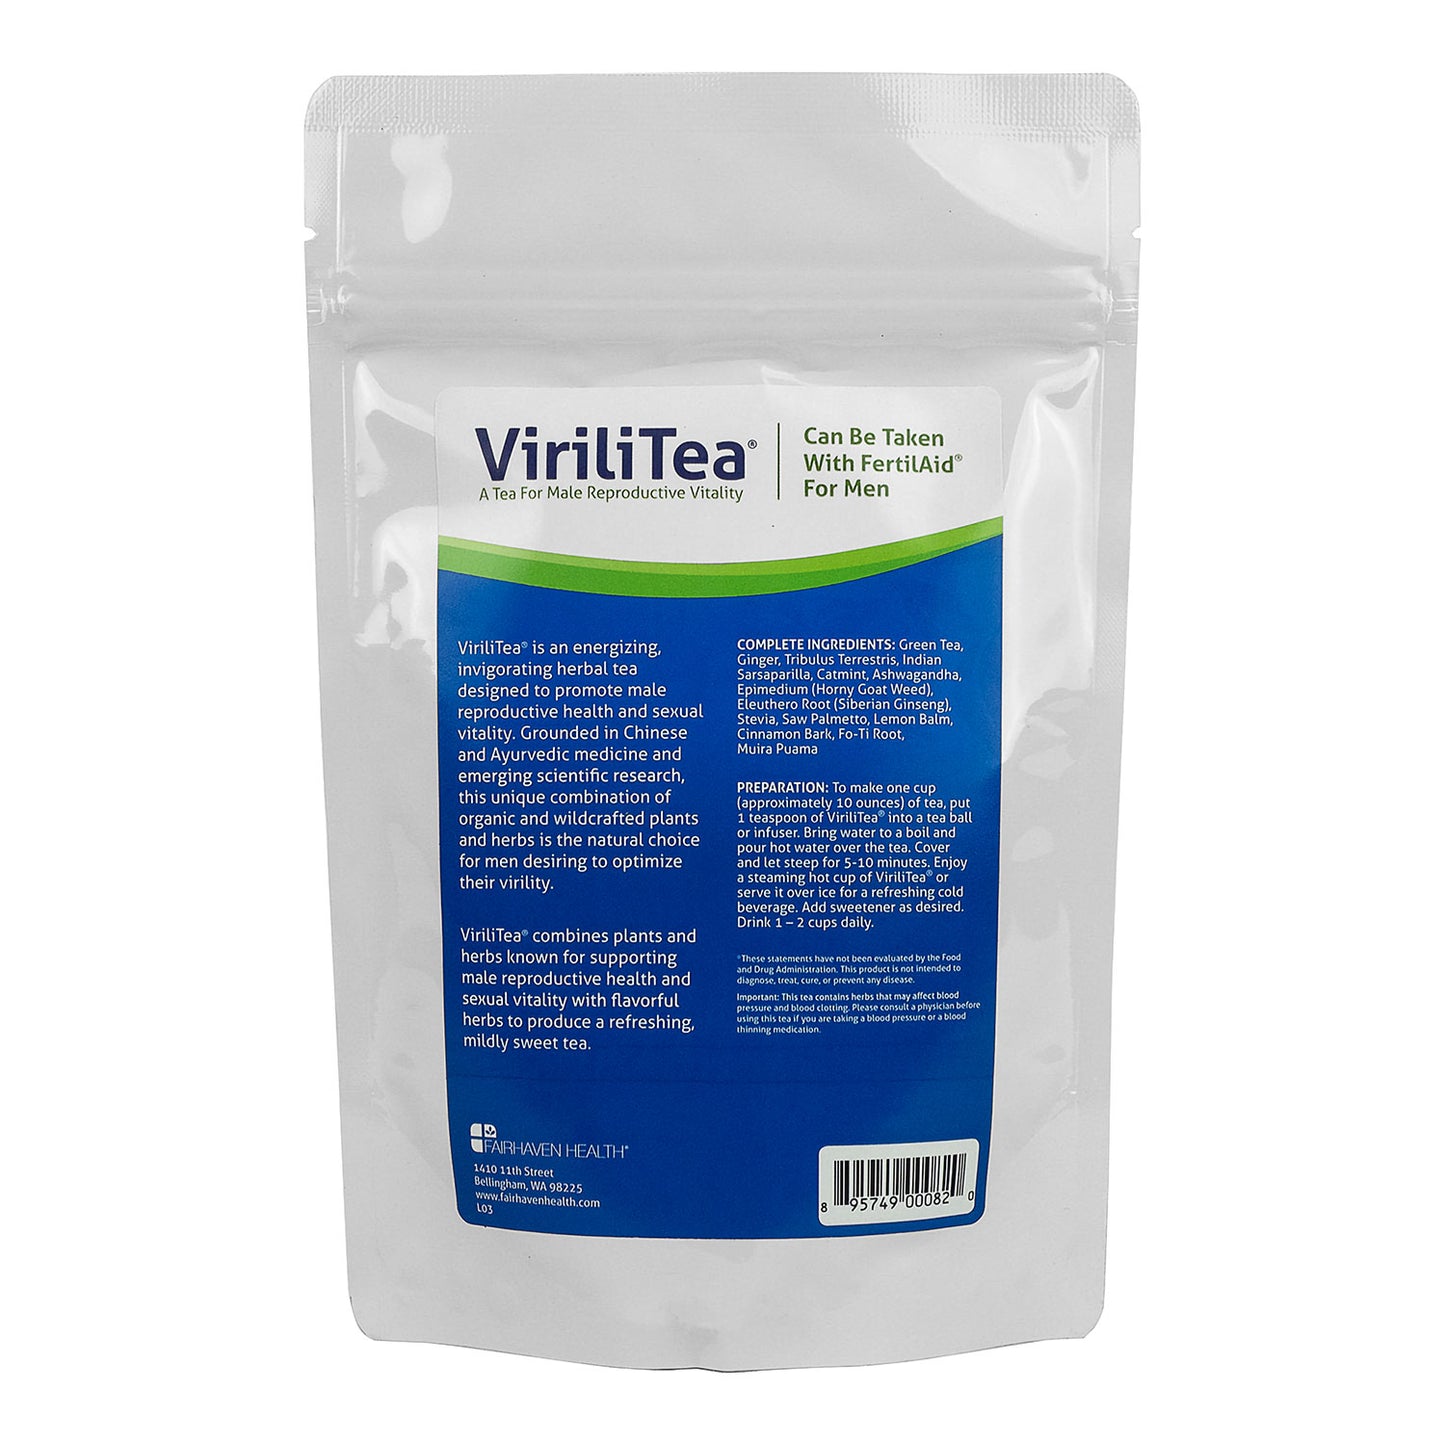 Virilitea back label